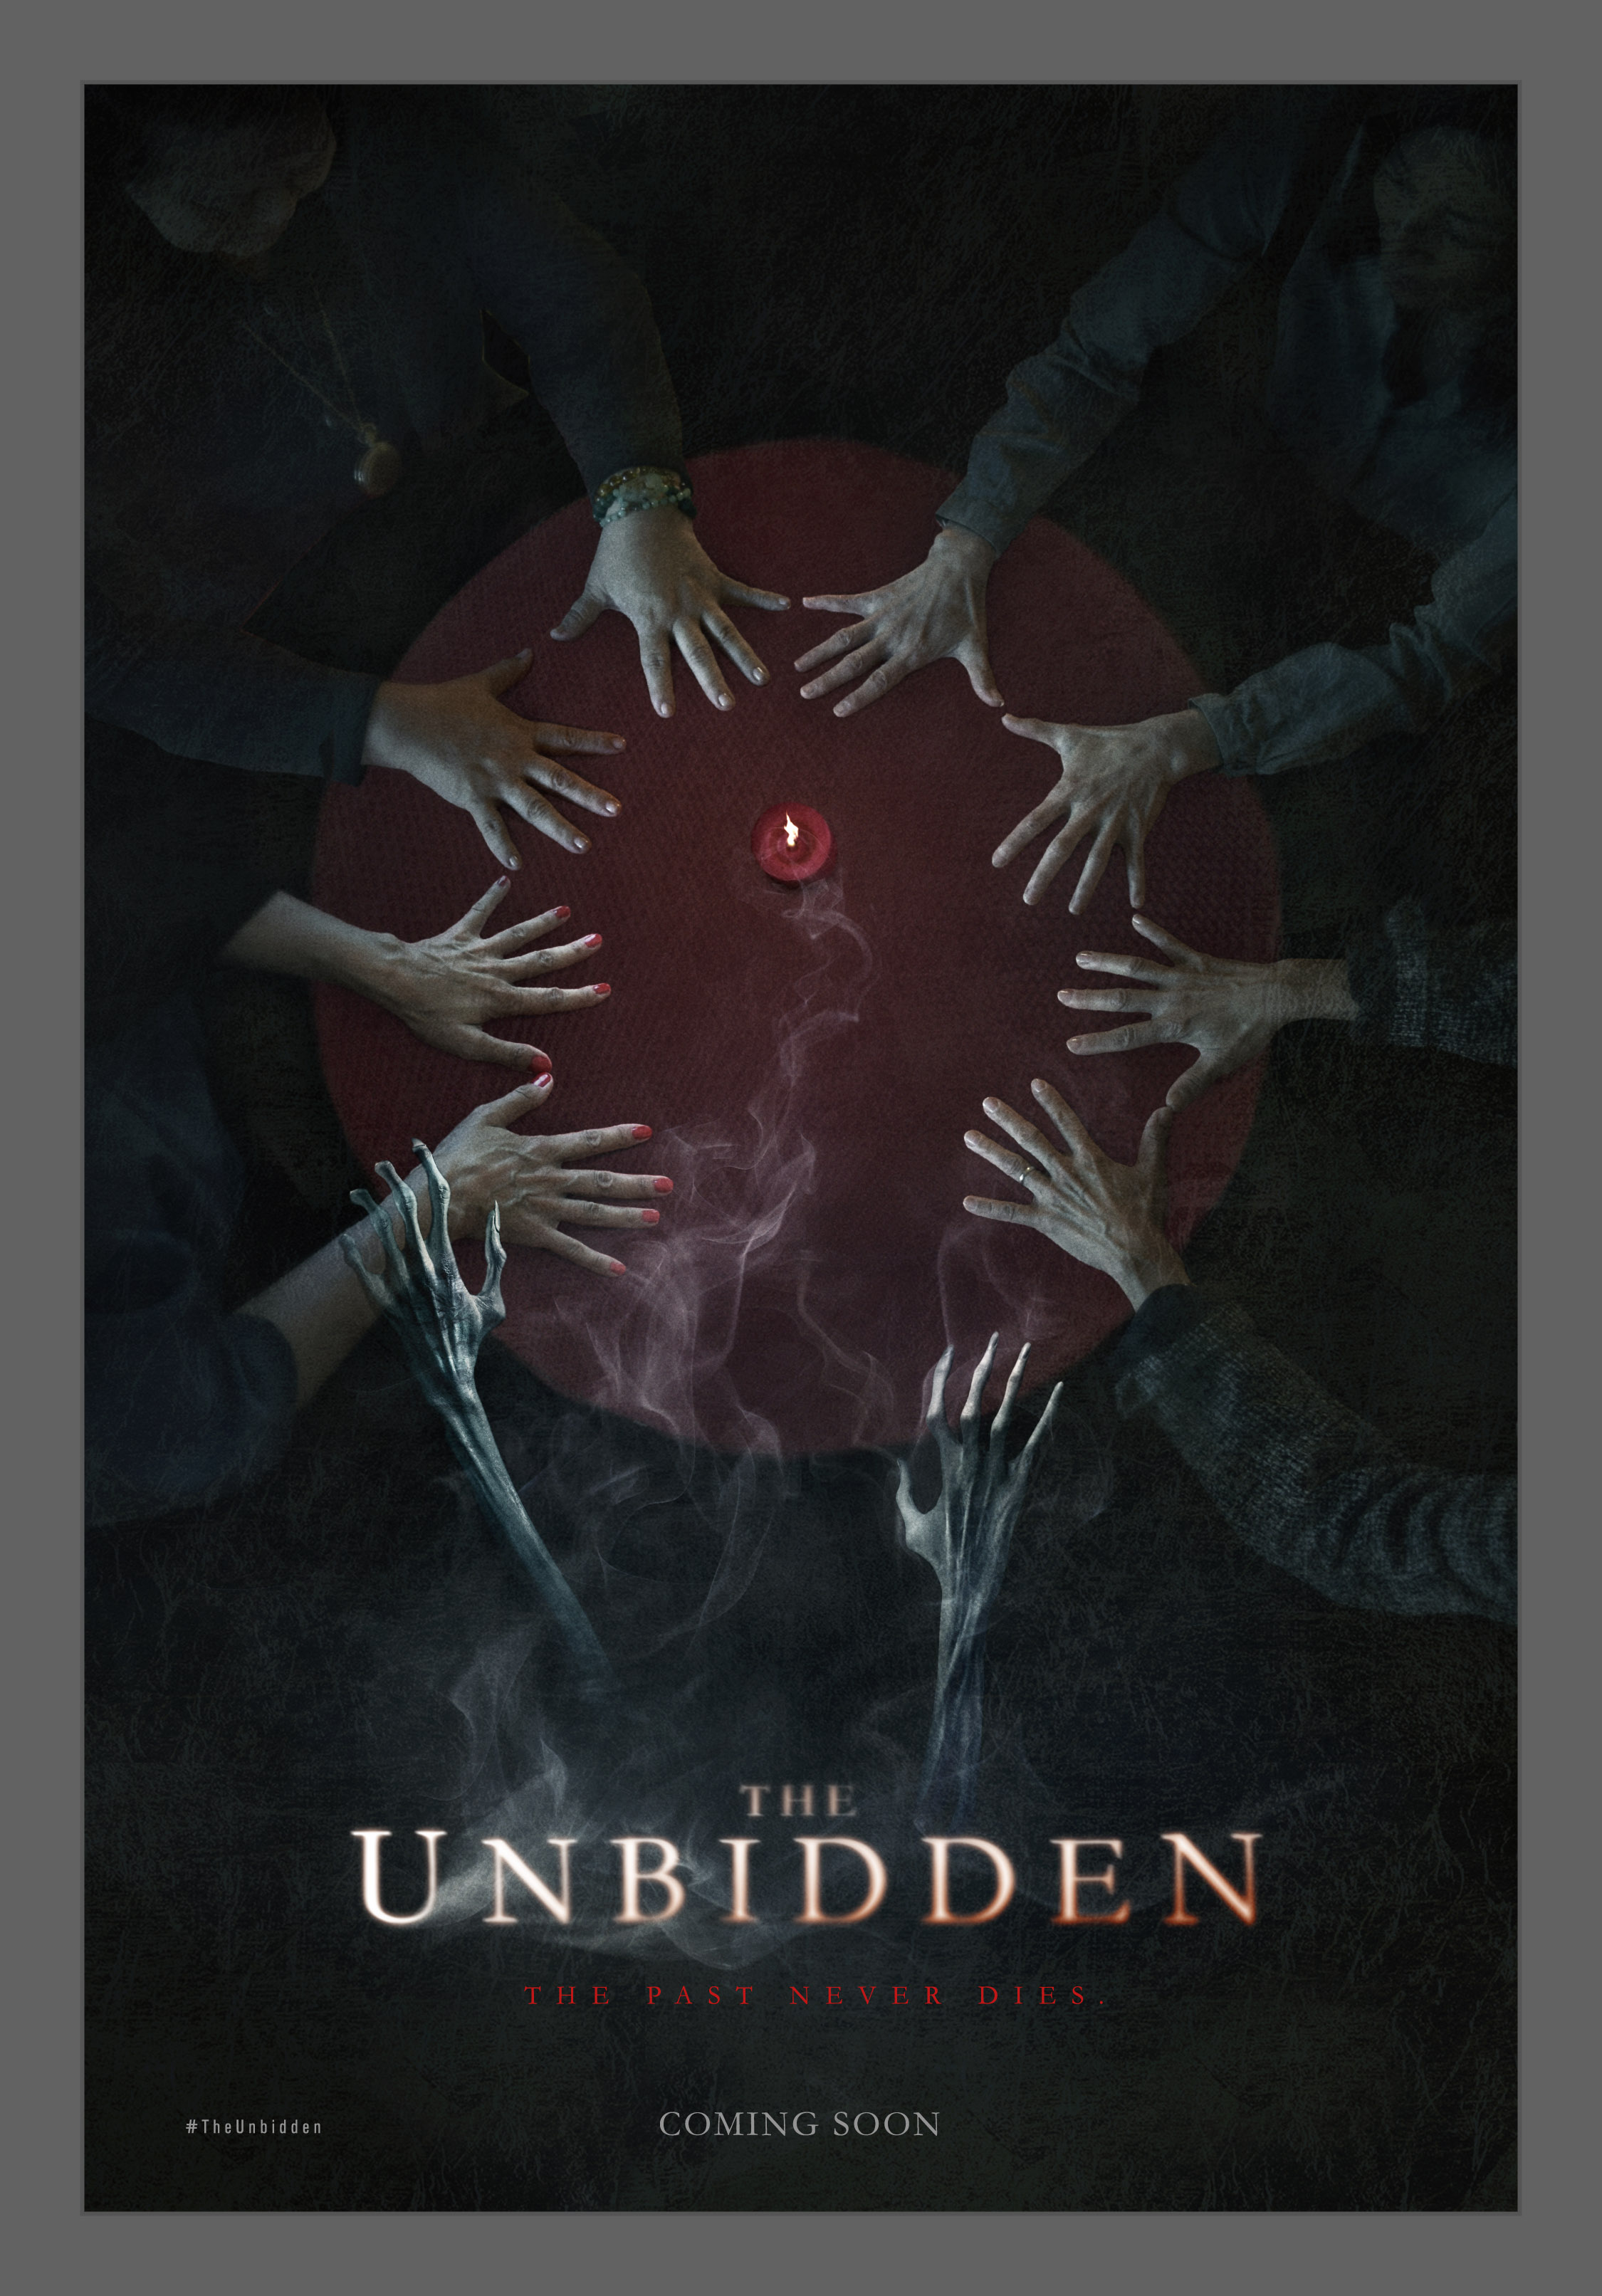 unbidden